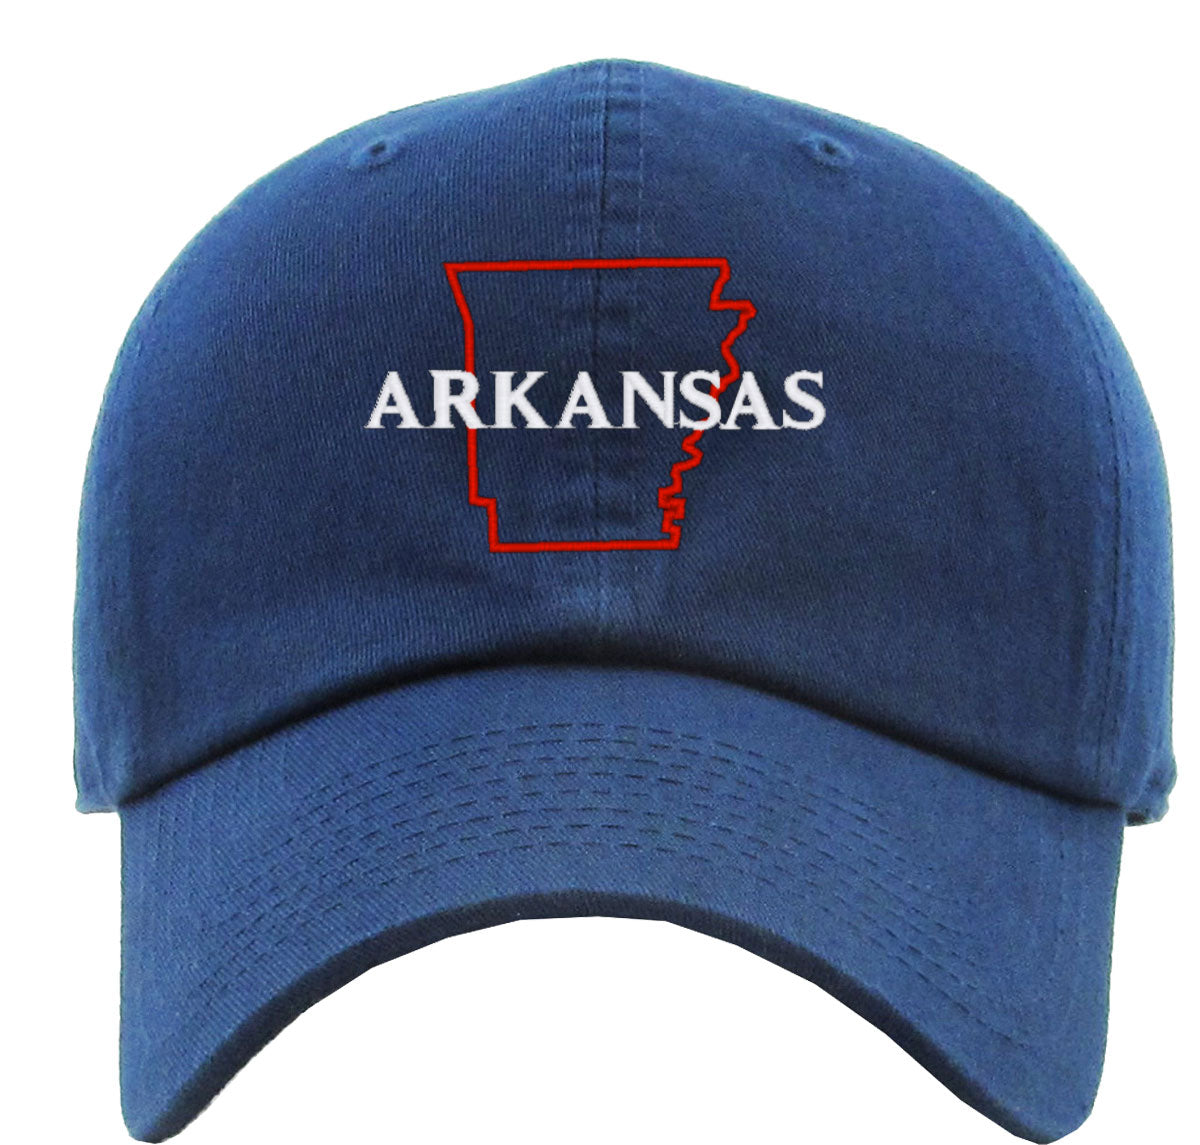 Arkansas Premium Baseball Cap